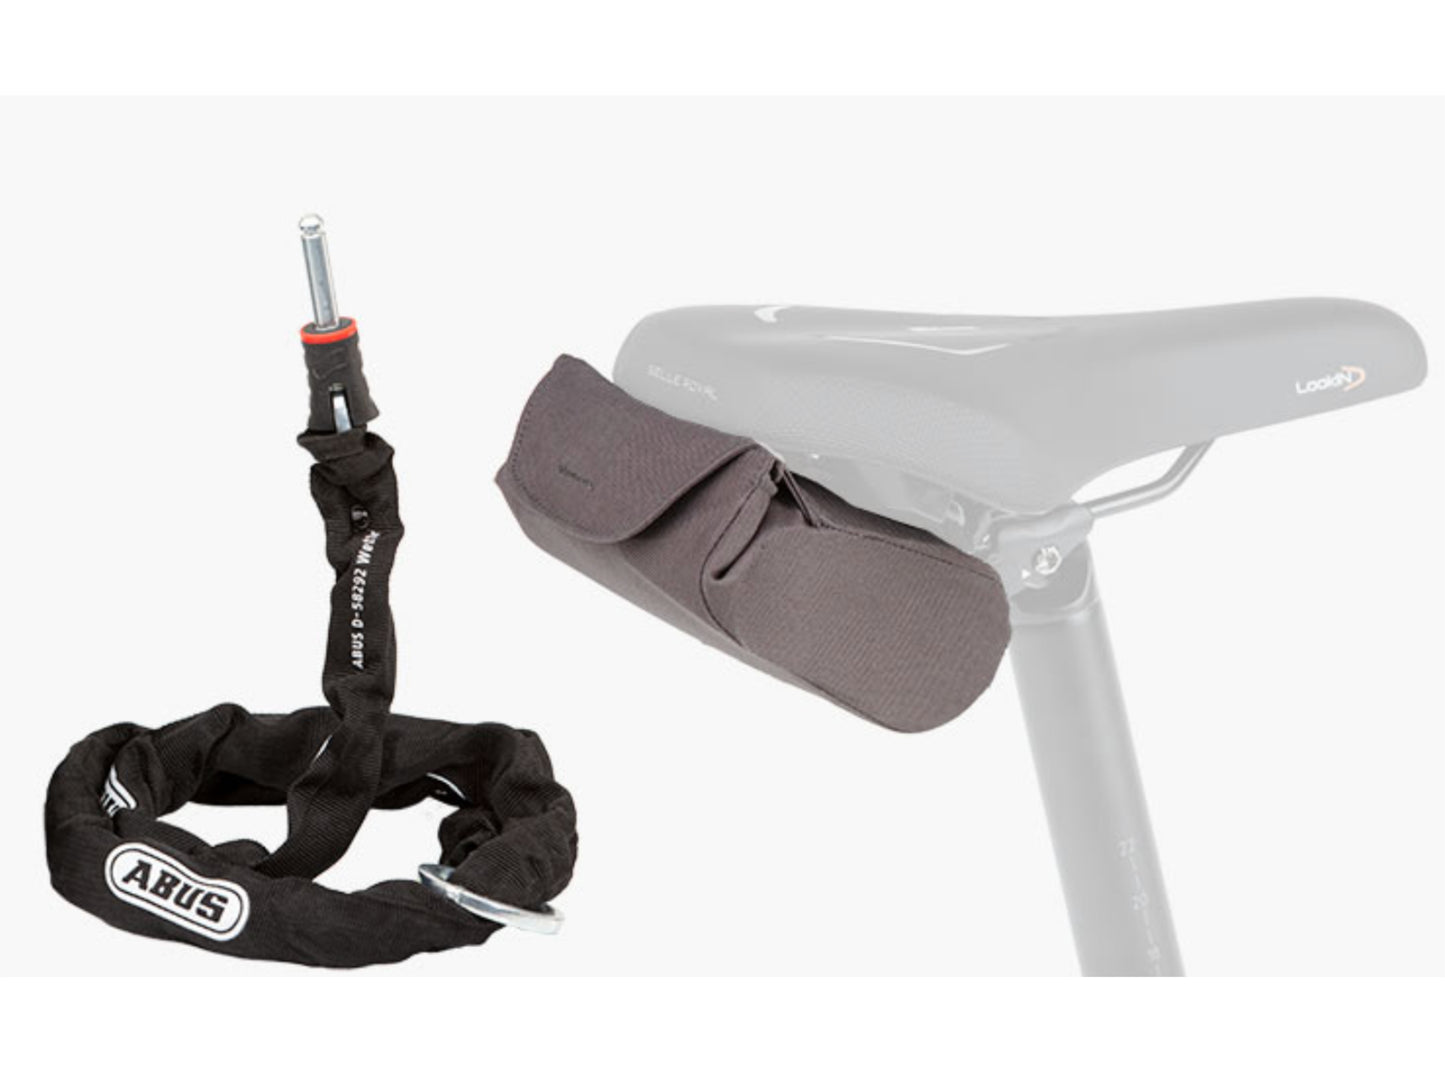 Riese & Muller Multitinker Vario eMtb hardtail close up additional lock & bag